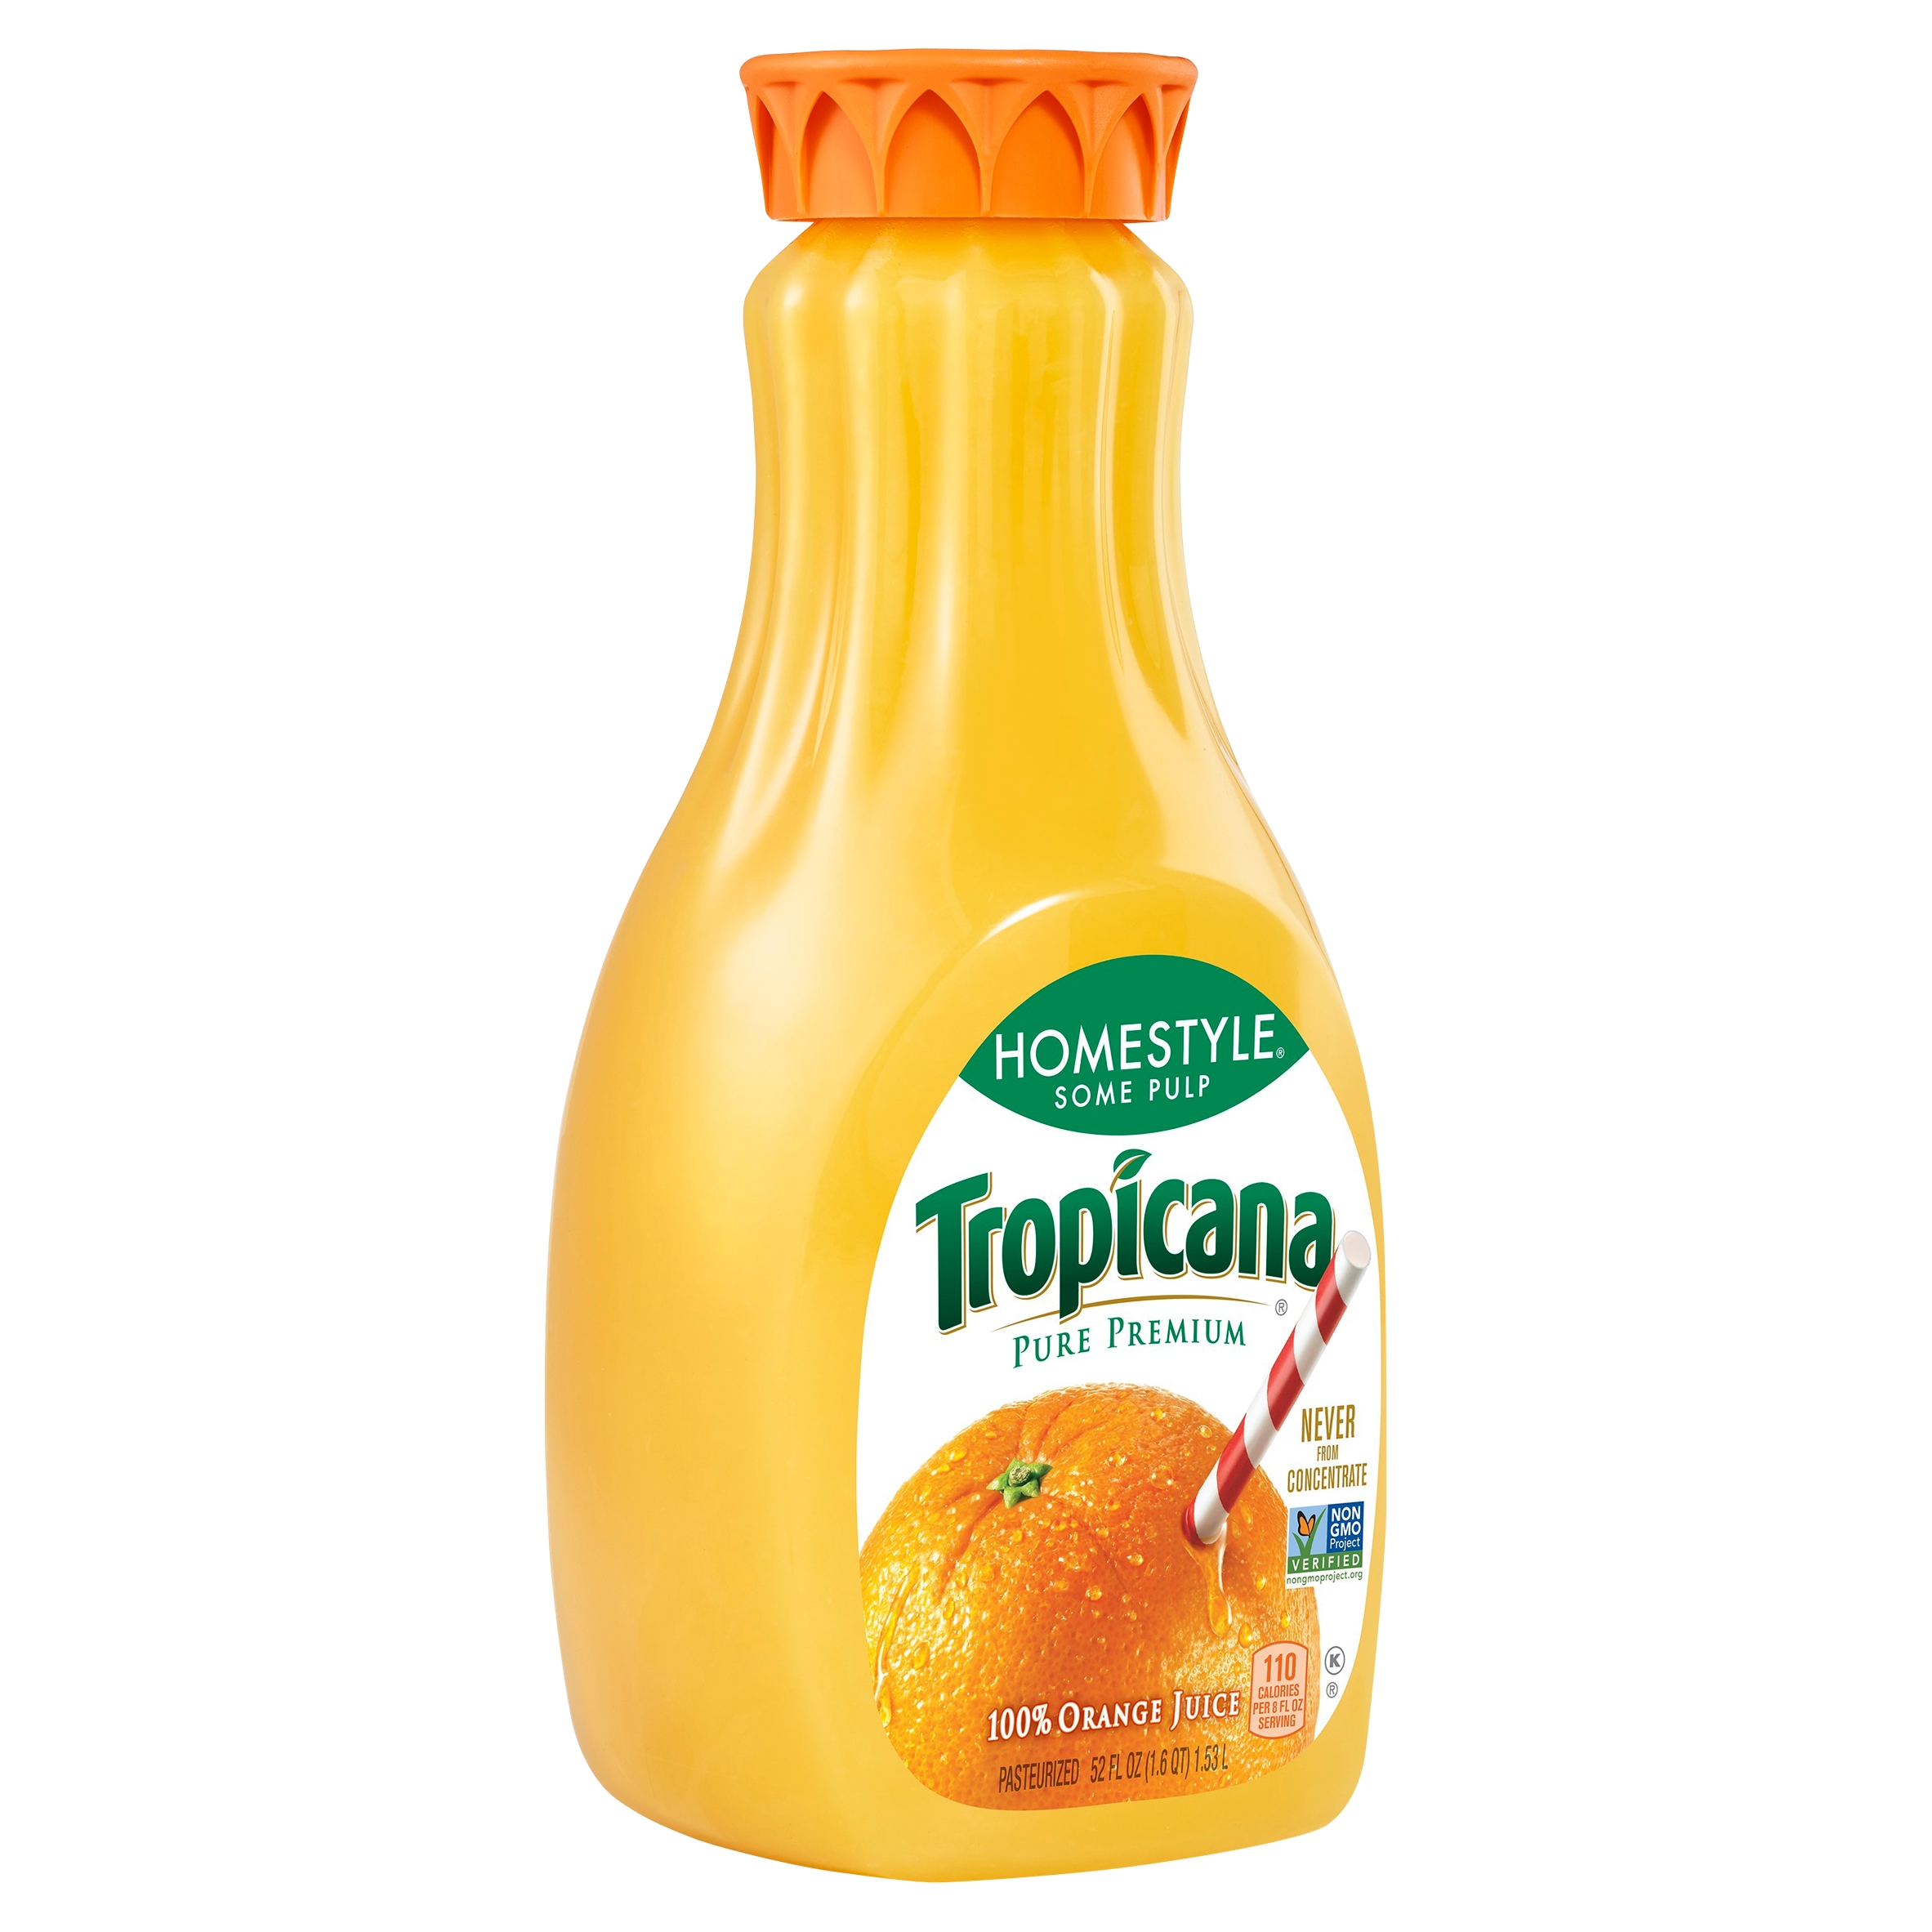 Tropicana Pure Premium, Homestyle Some Pulp 100% Orange Juice, 52 oz Bottle - image 2 of 9